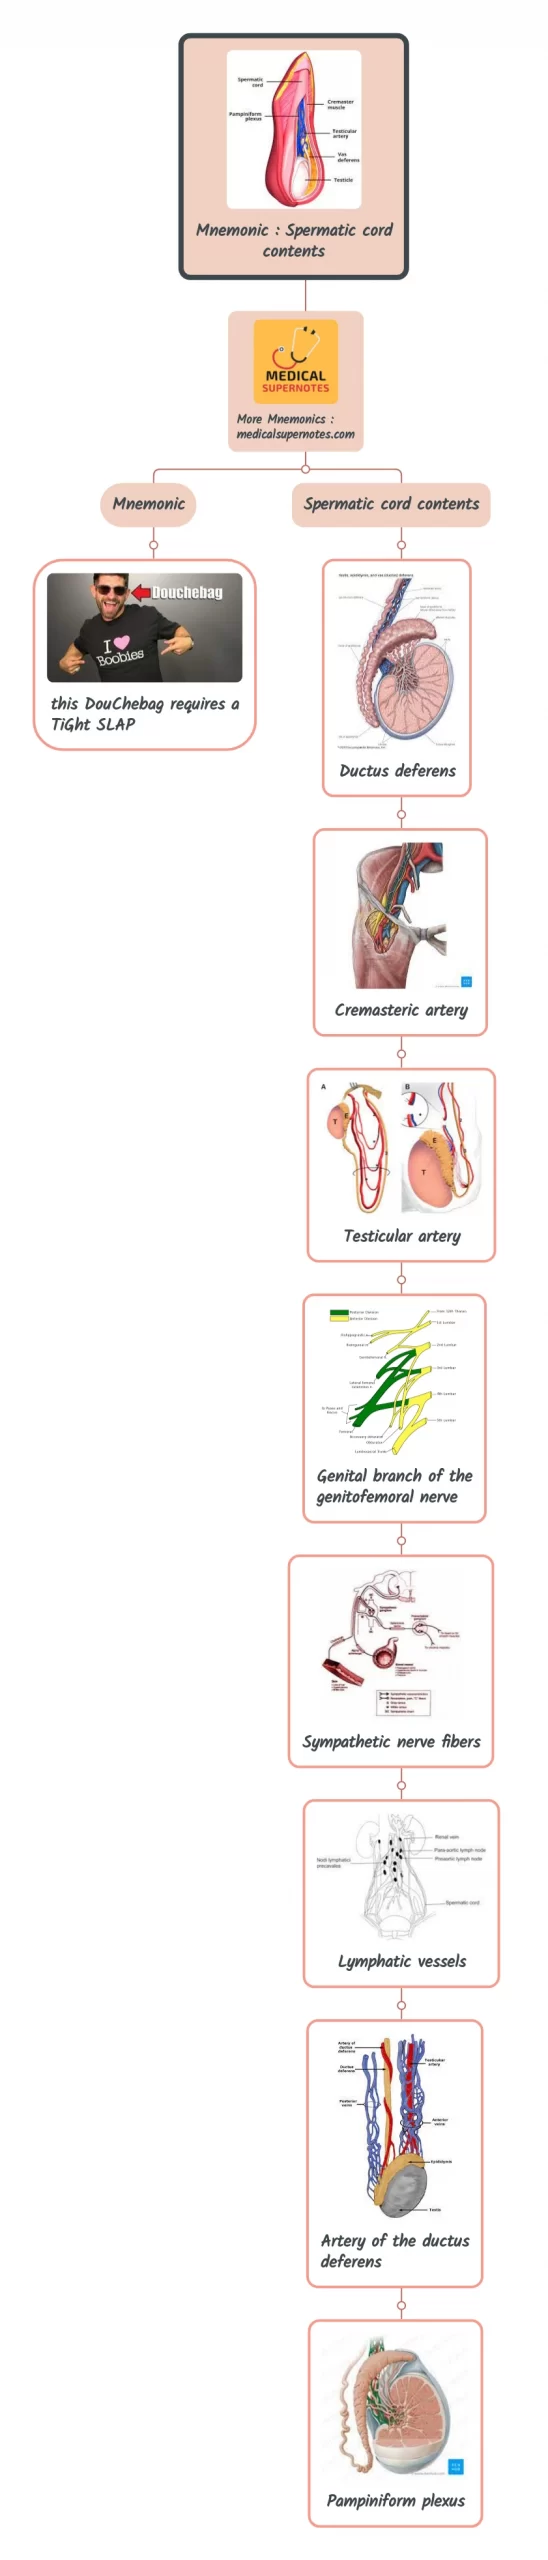 Mnemonic _ Spermatic cord contents